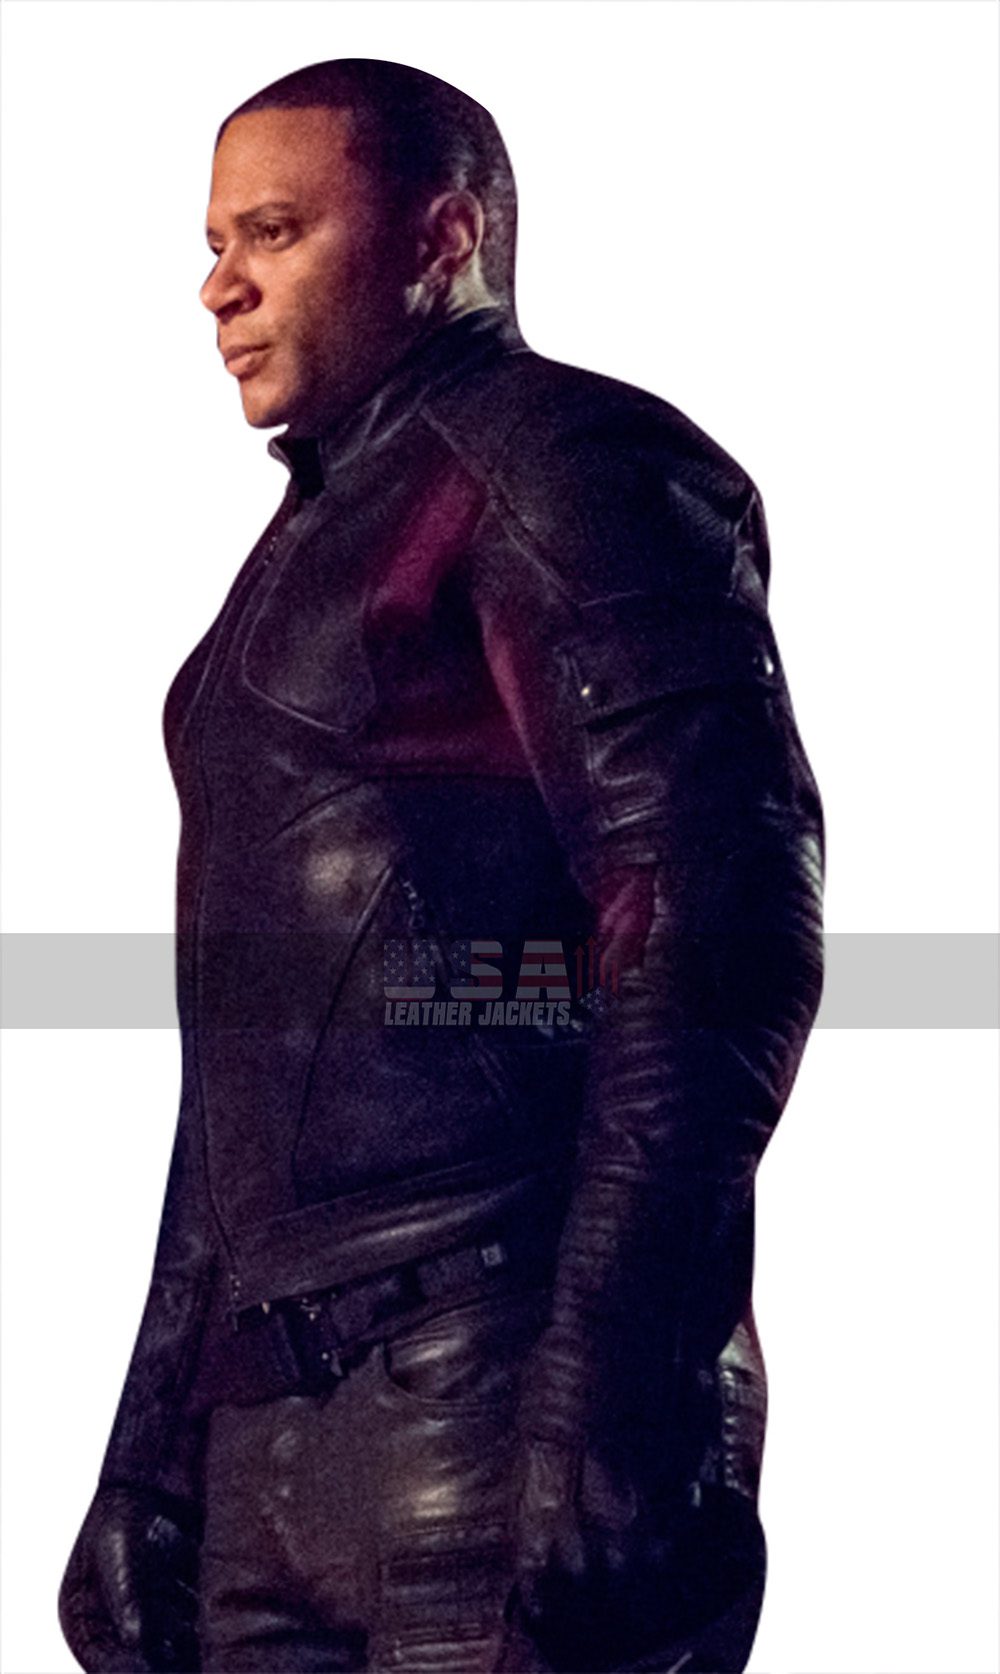 Arrow John Diggle (David Ramsey) Costume Leather Jacket